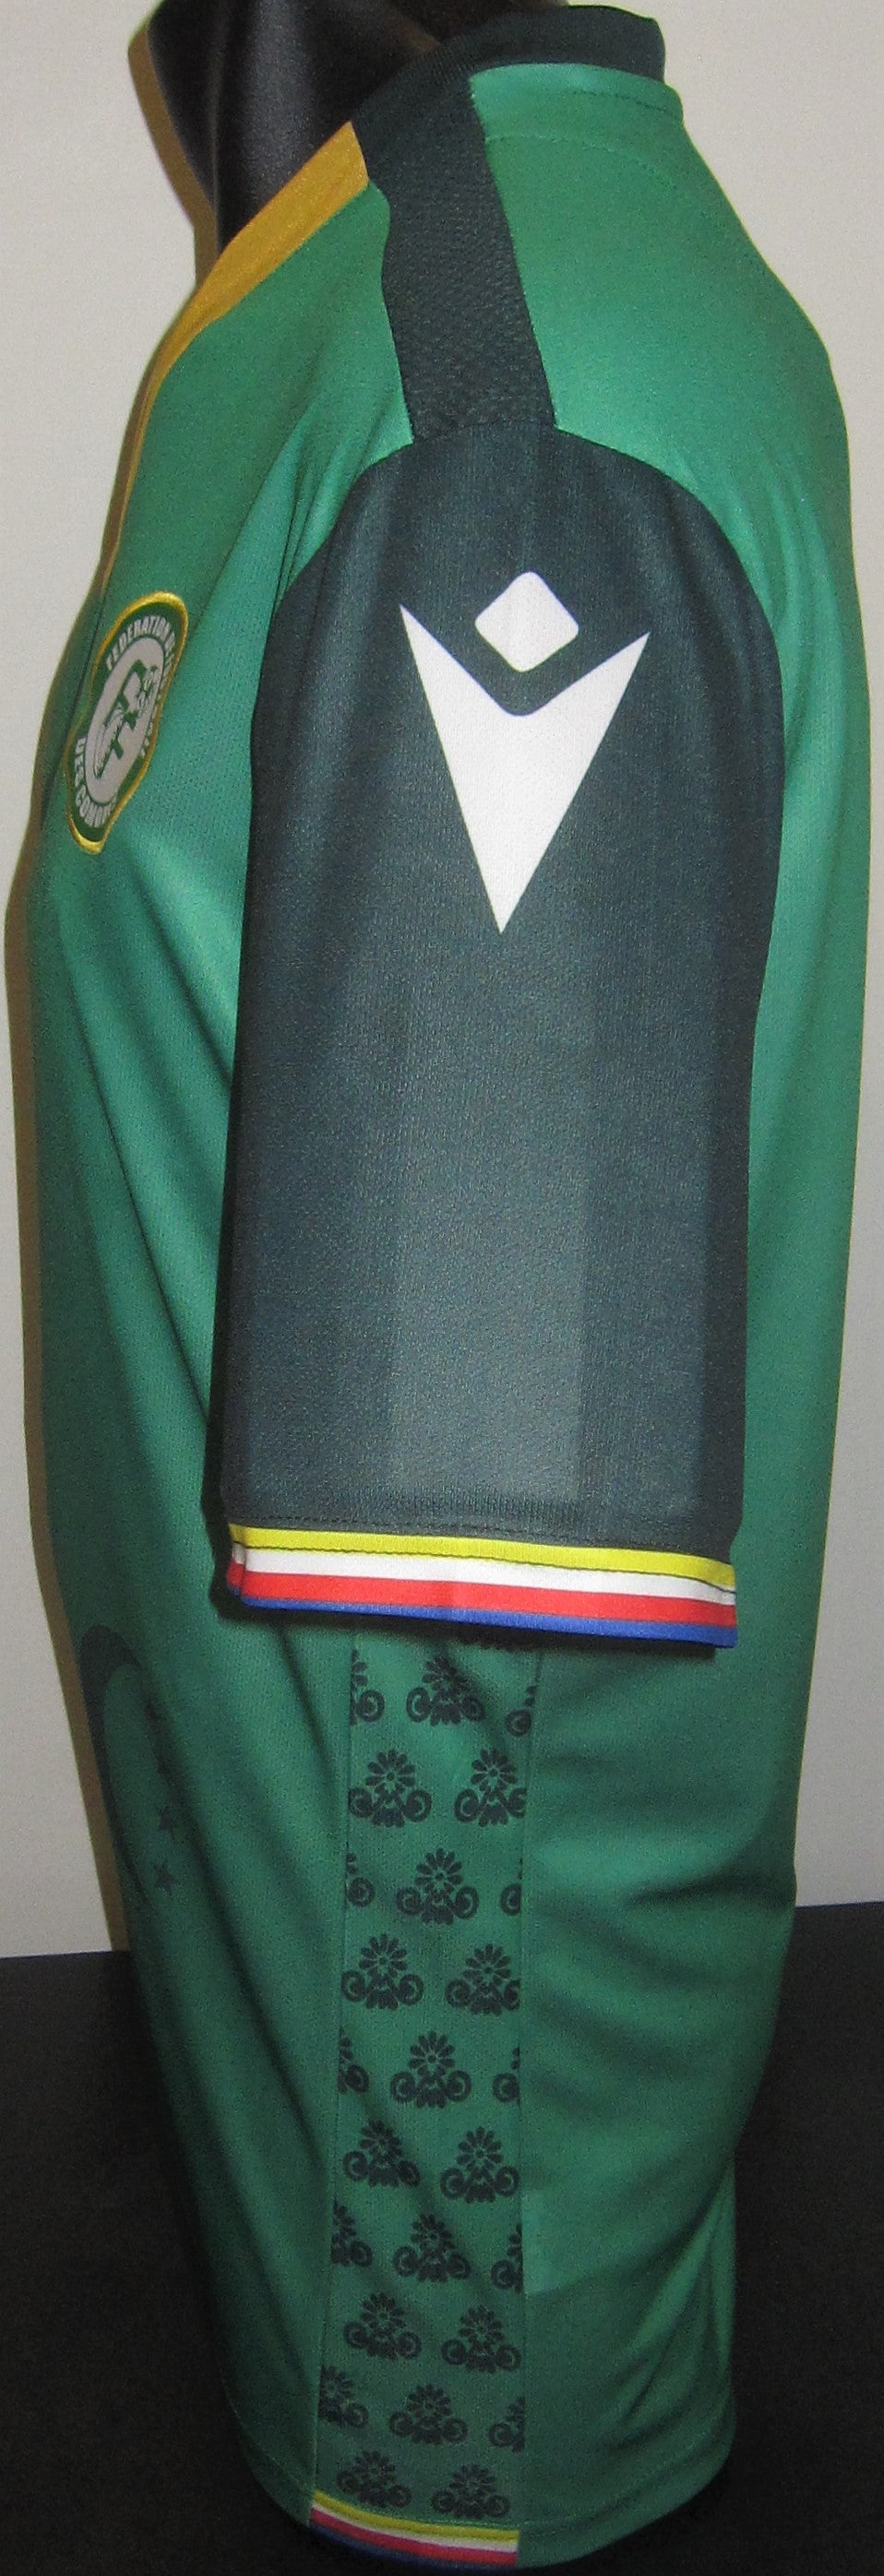 Comoros 2021-22 Home Jersey/Shirt